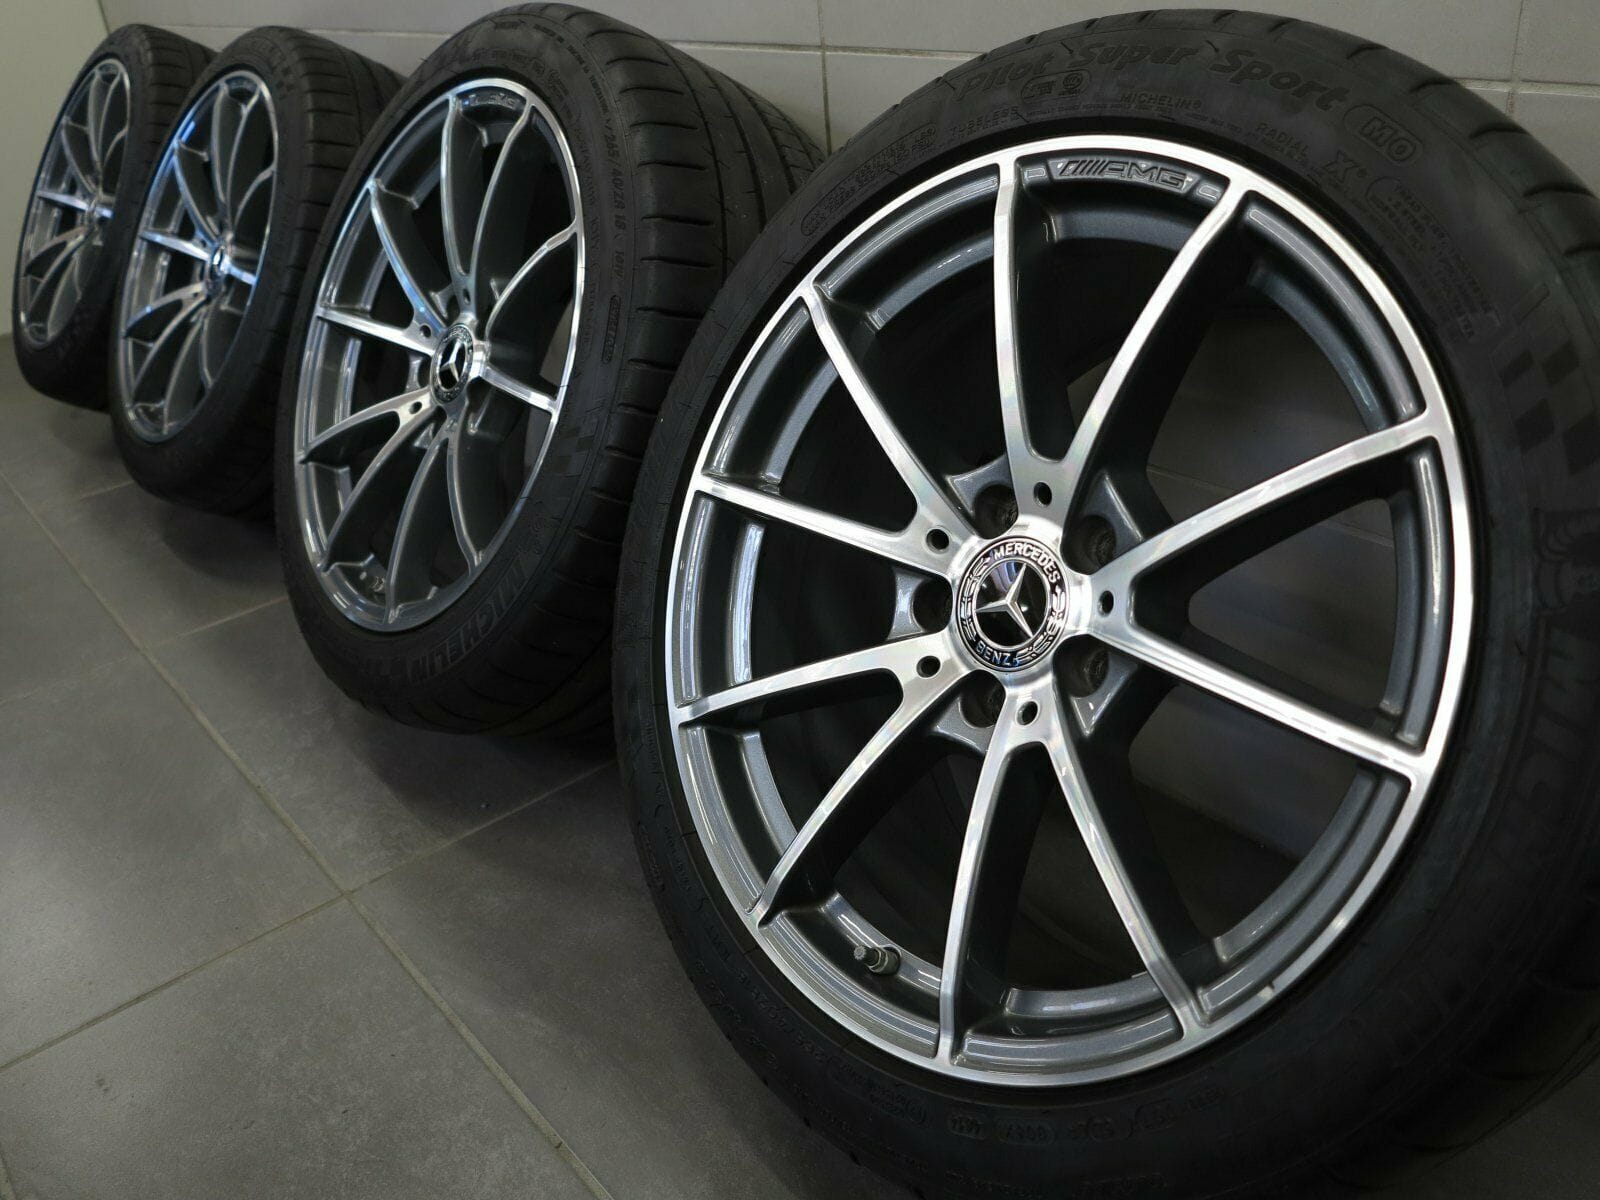 Wheels and Tires/Axles - WTB: OEM c63 sedan 18" wheels - New or Used - 0  All Models - Los Angeles, CA 90048, United States